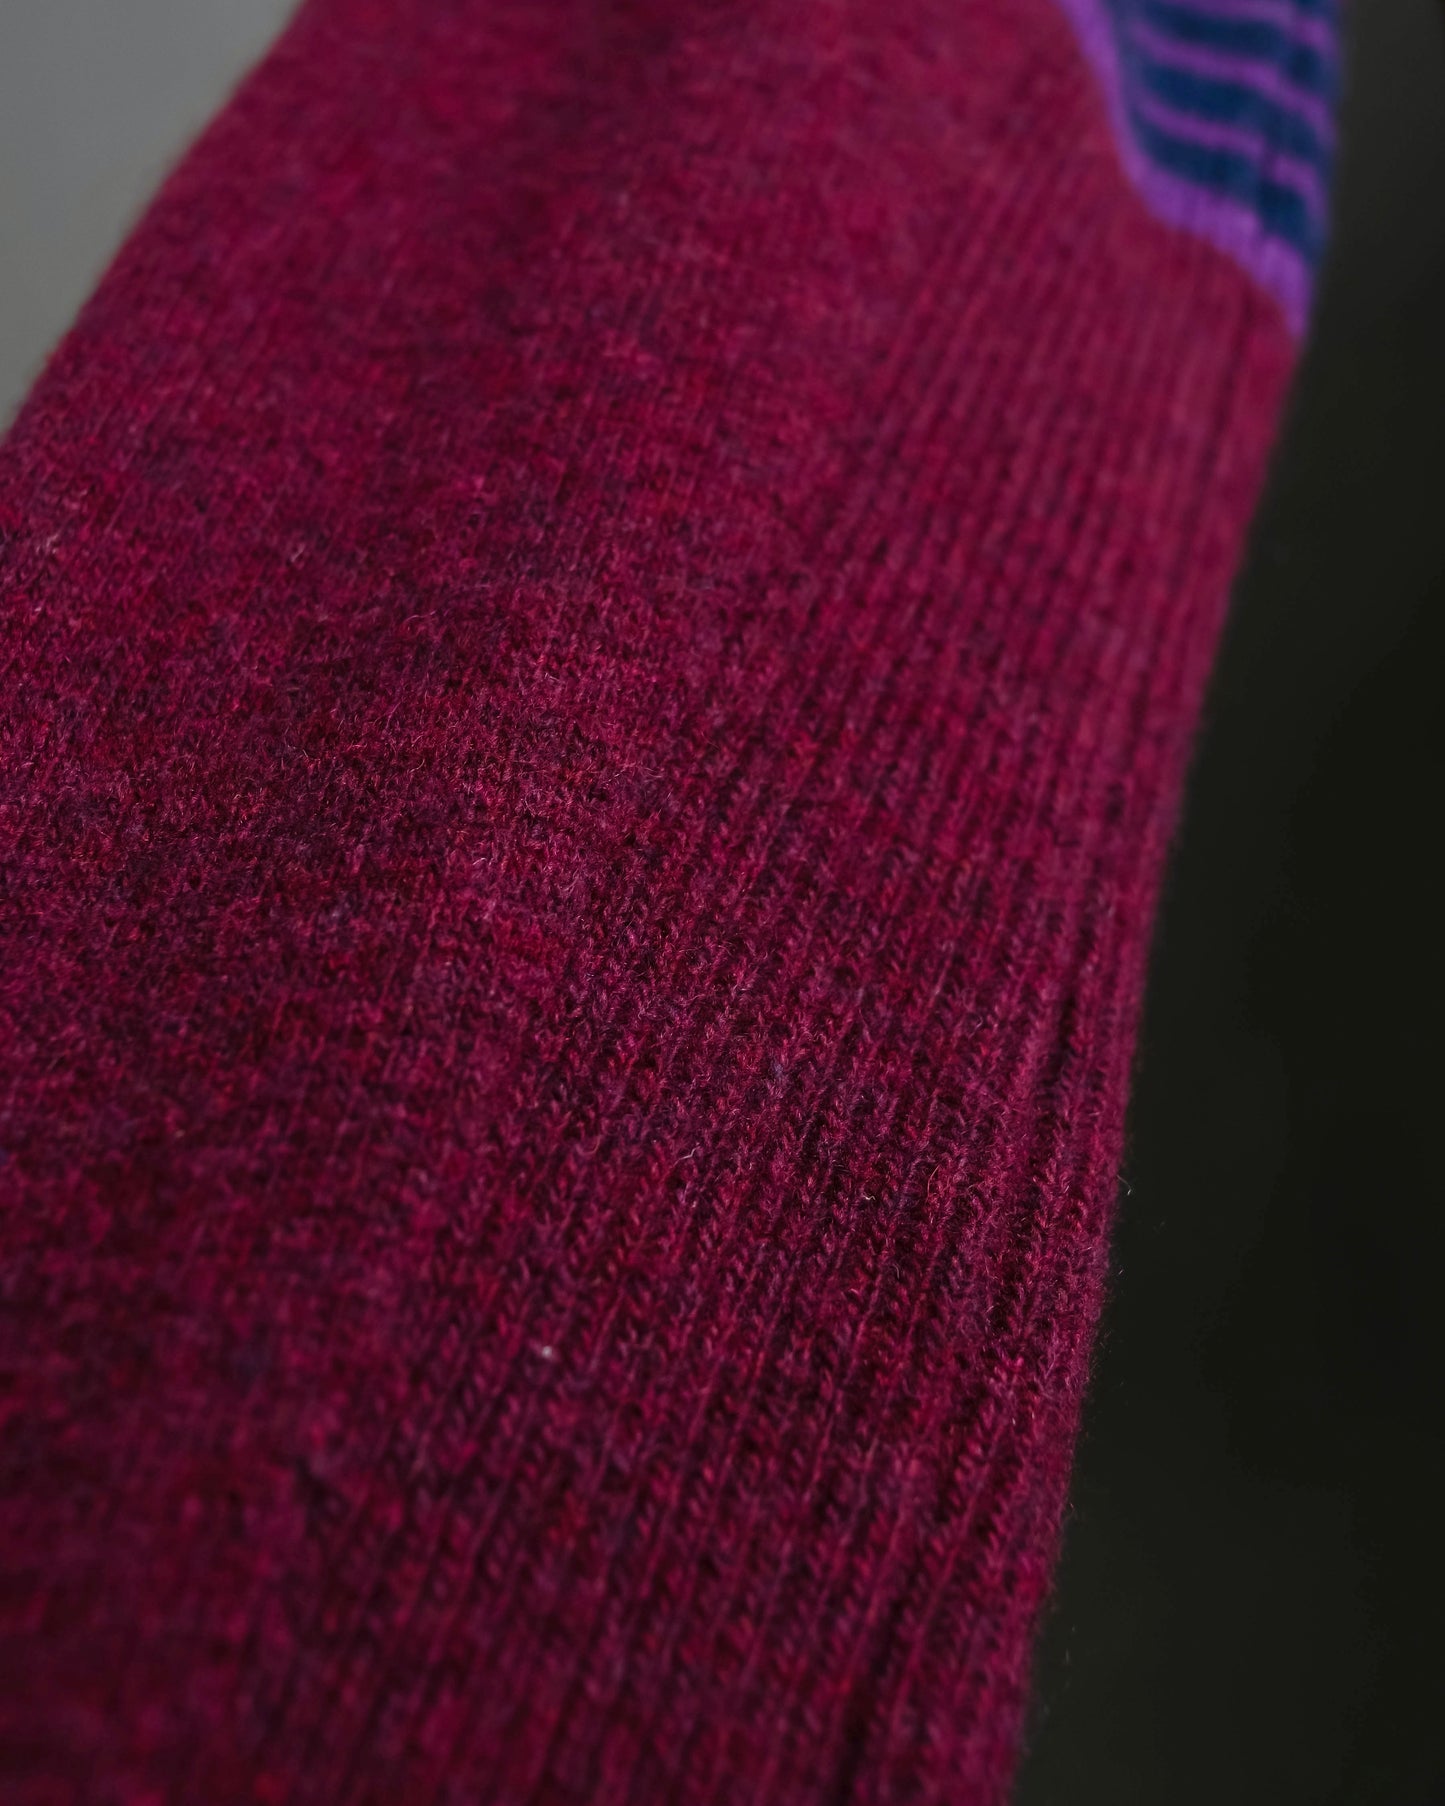 "D&G" Armband stripe design wool knit